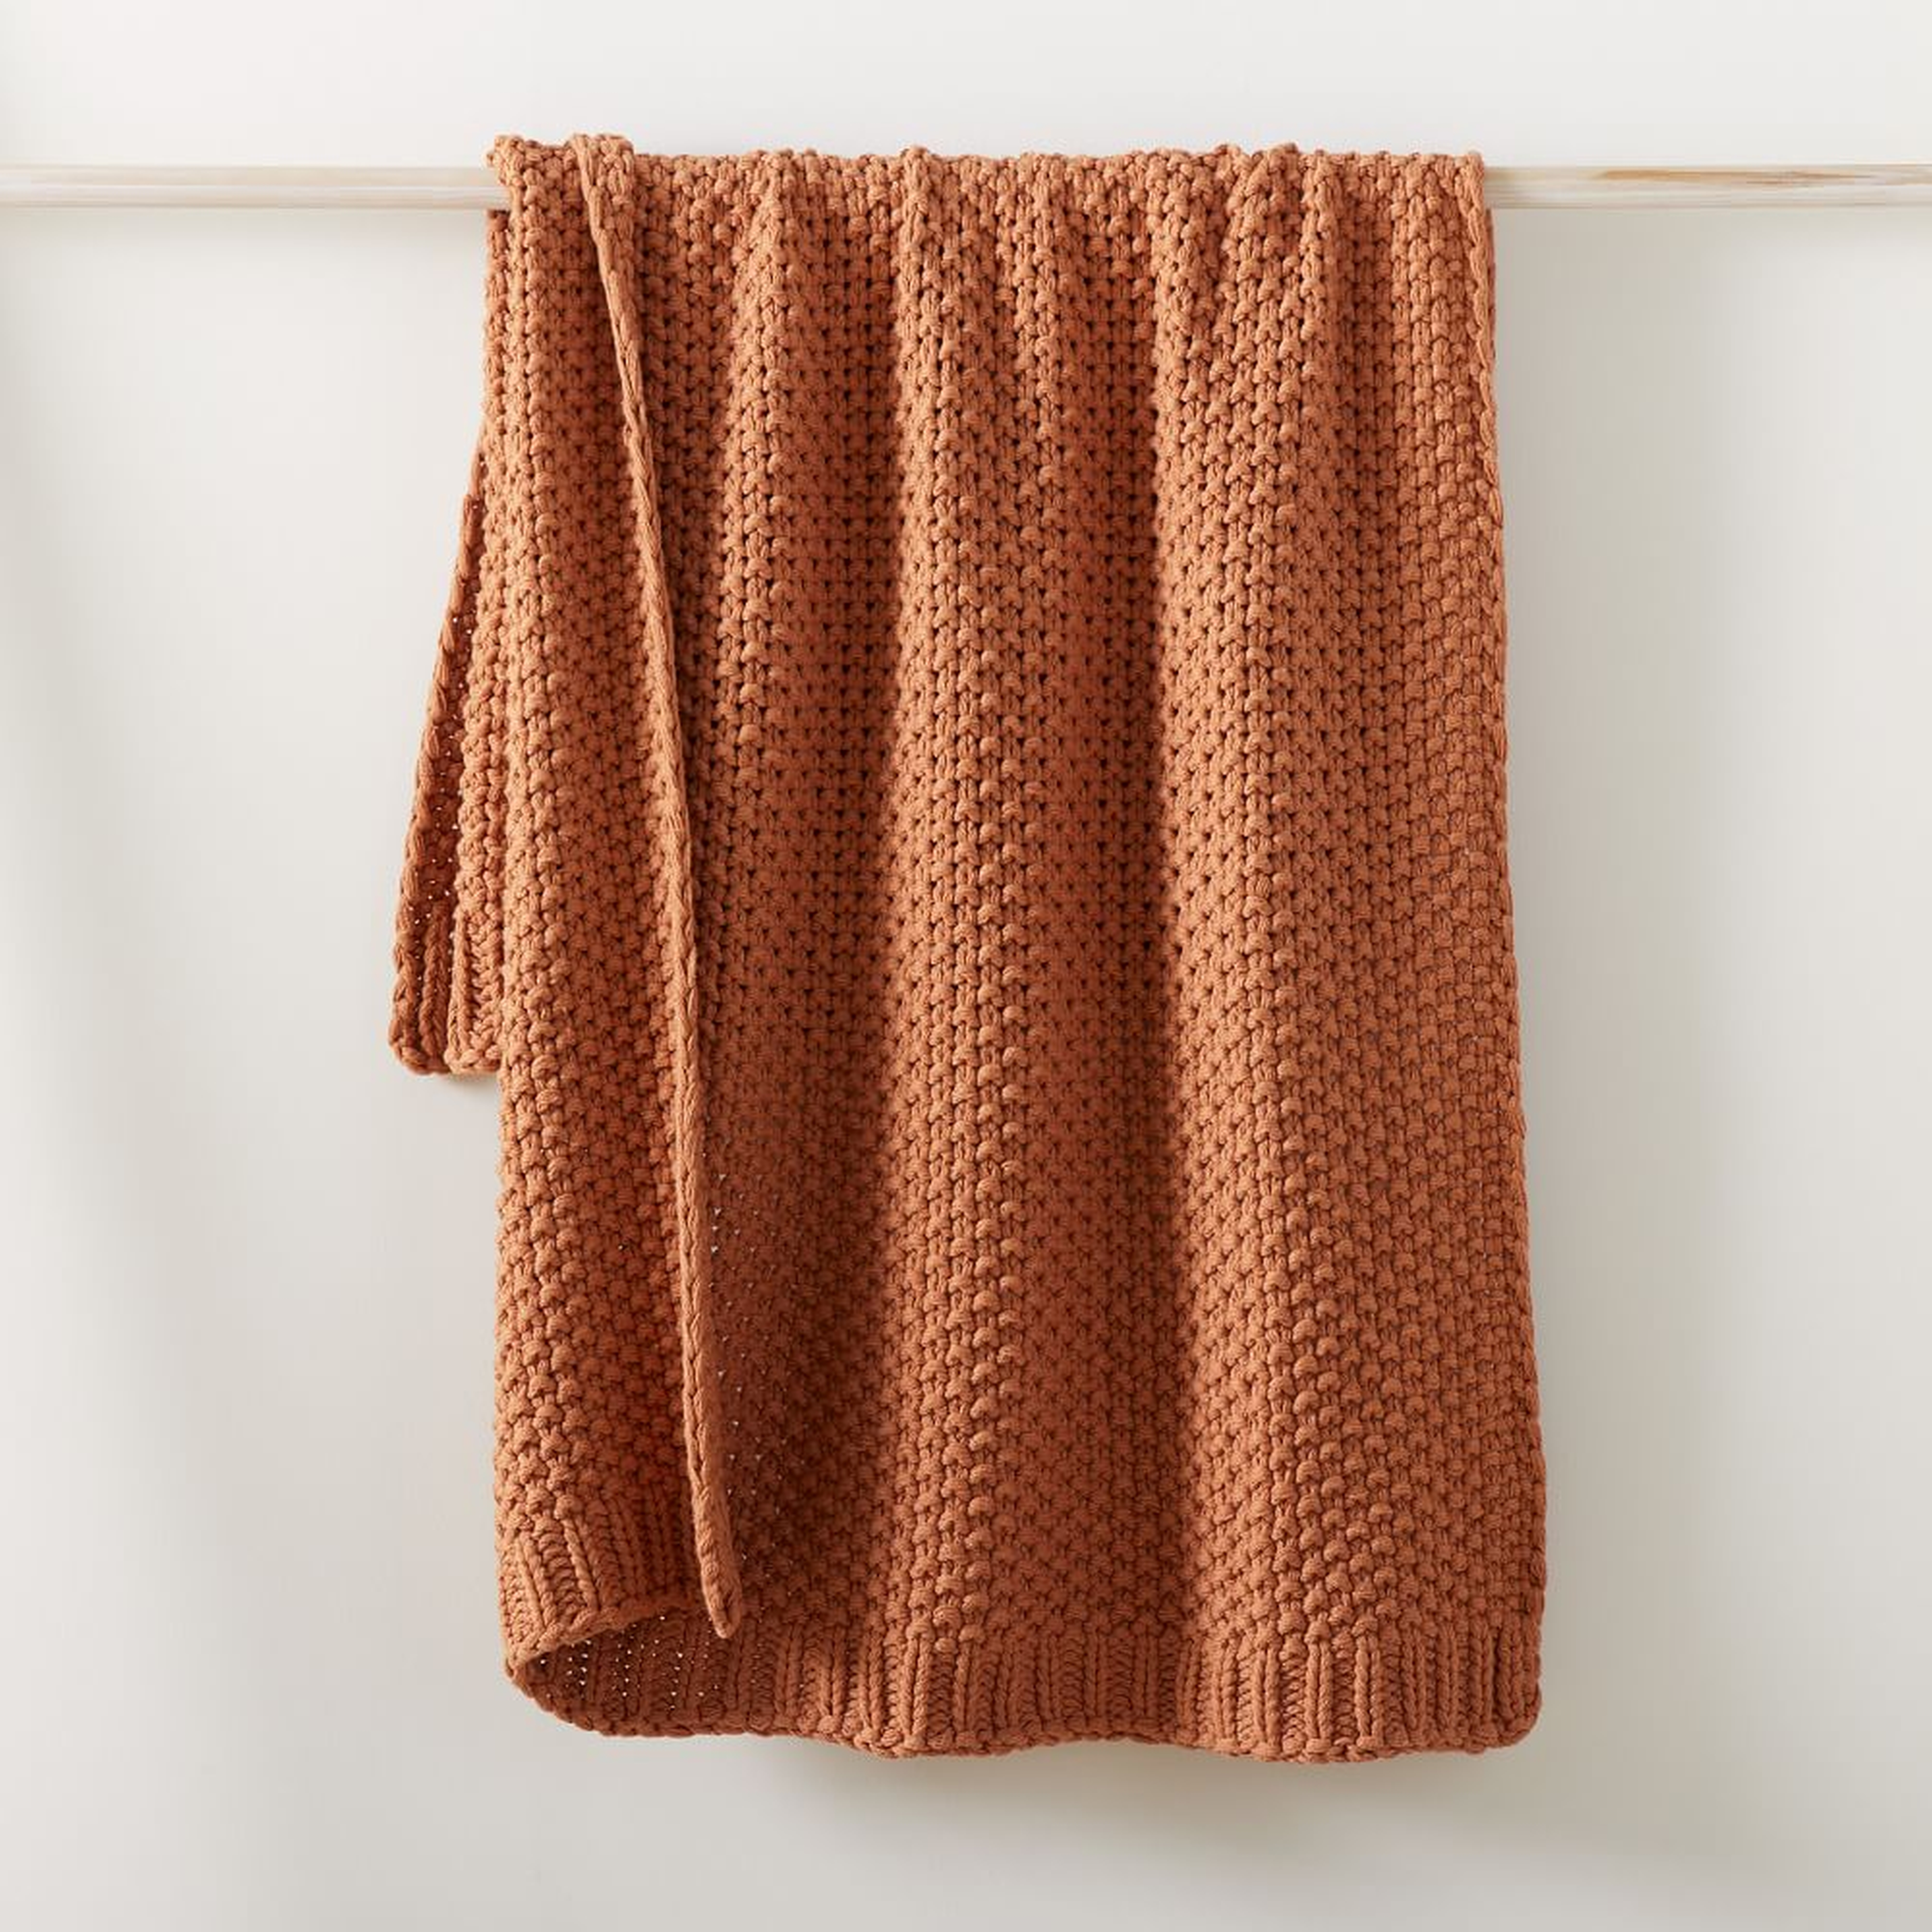 Chunky Cotton Knit Throw, 50"x60", Terracotta - West Elm